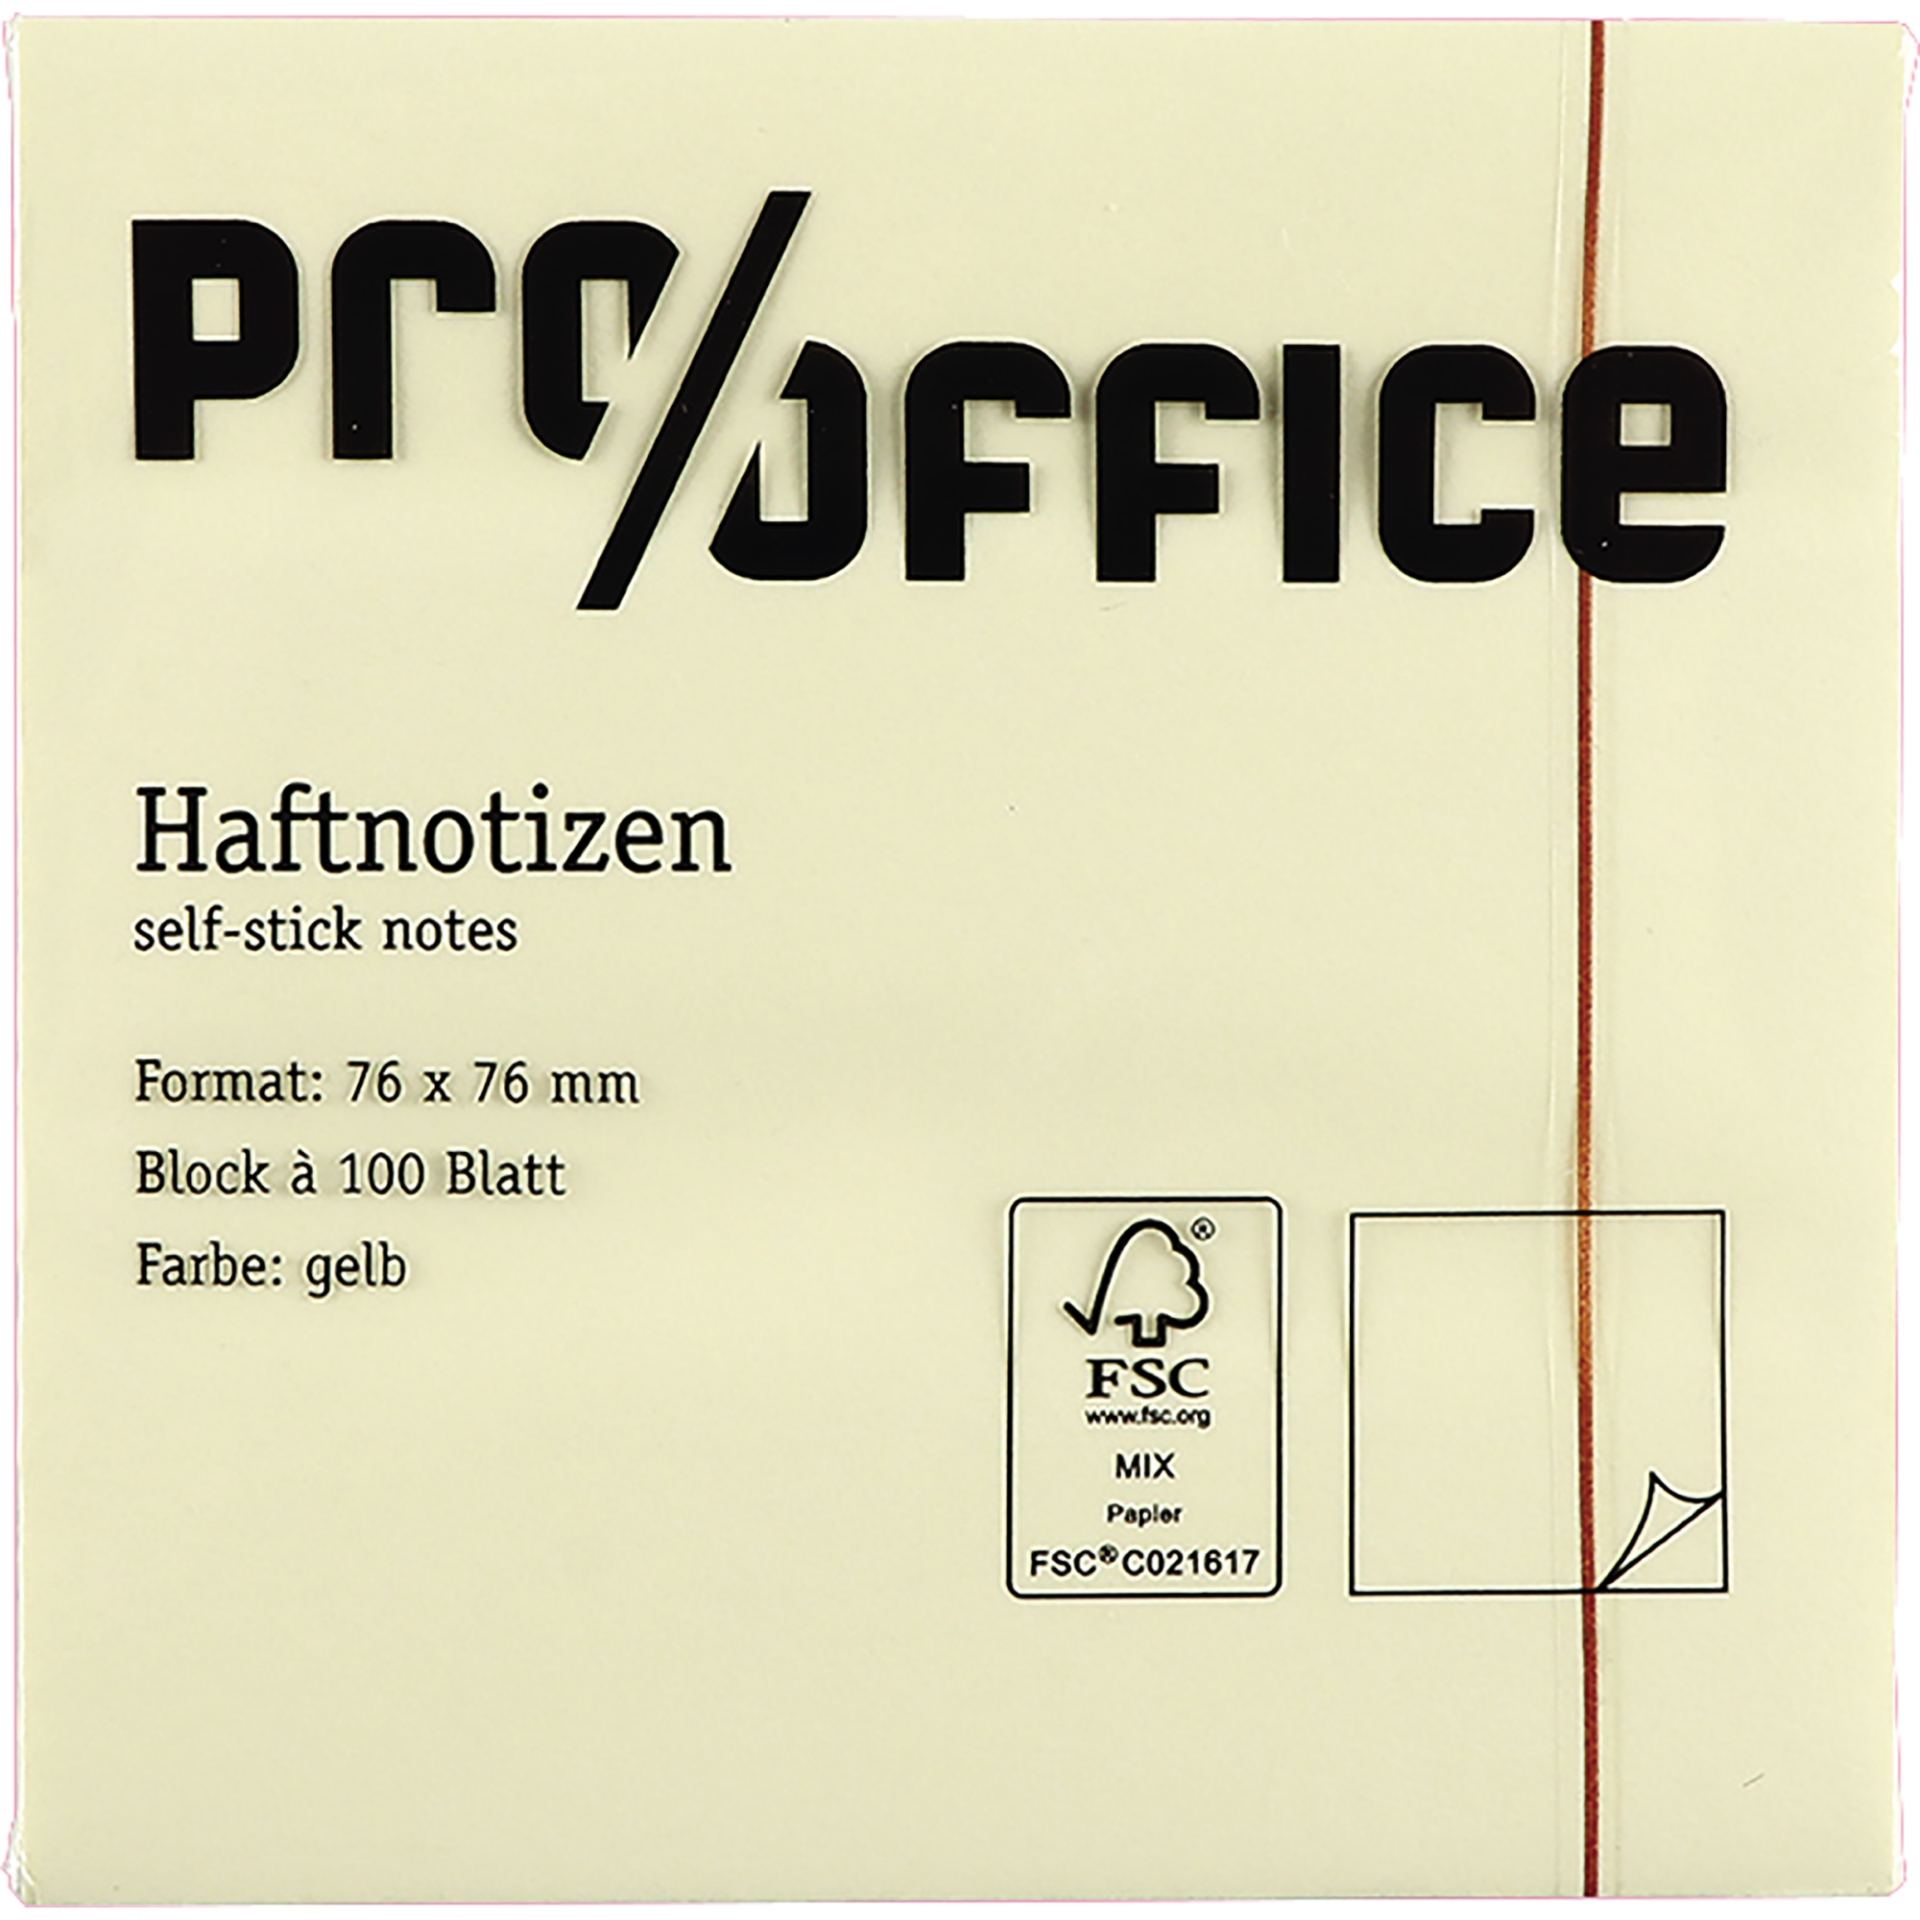 Haftnotizen Pro/Office gelb 76x76mm 12x100 Blatt